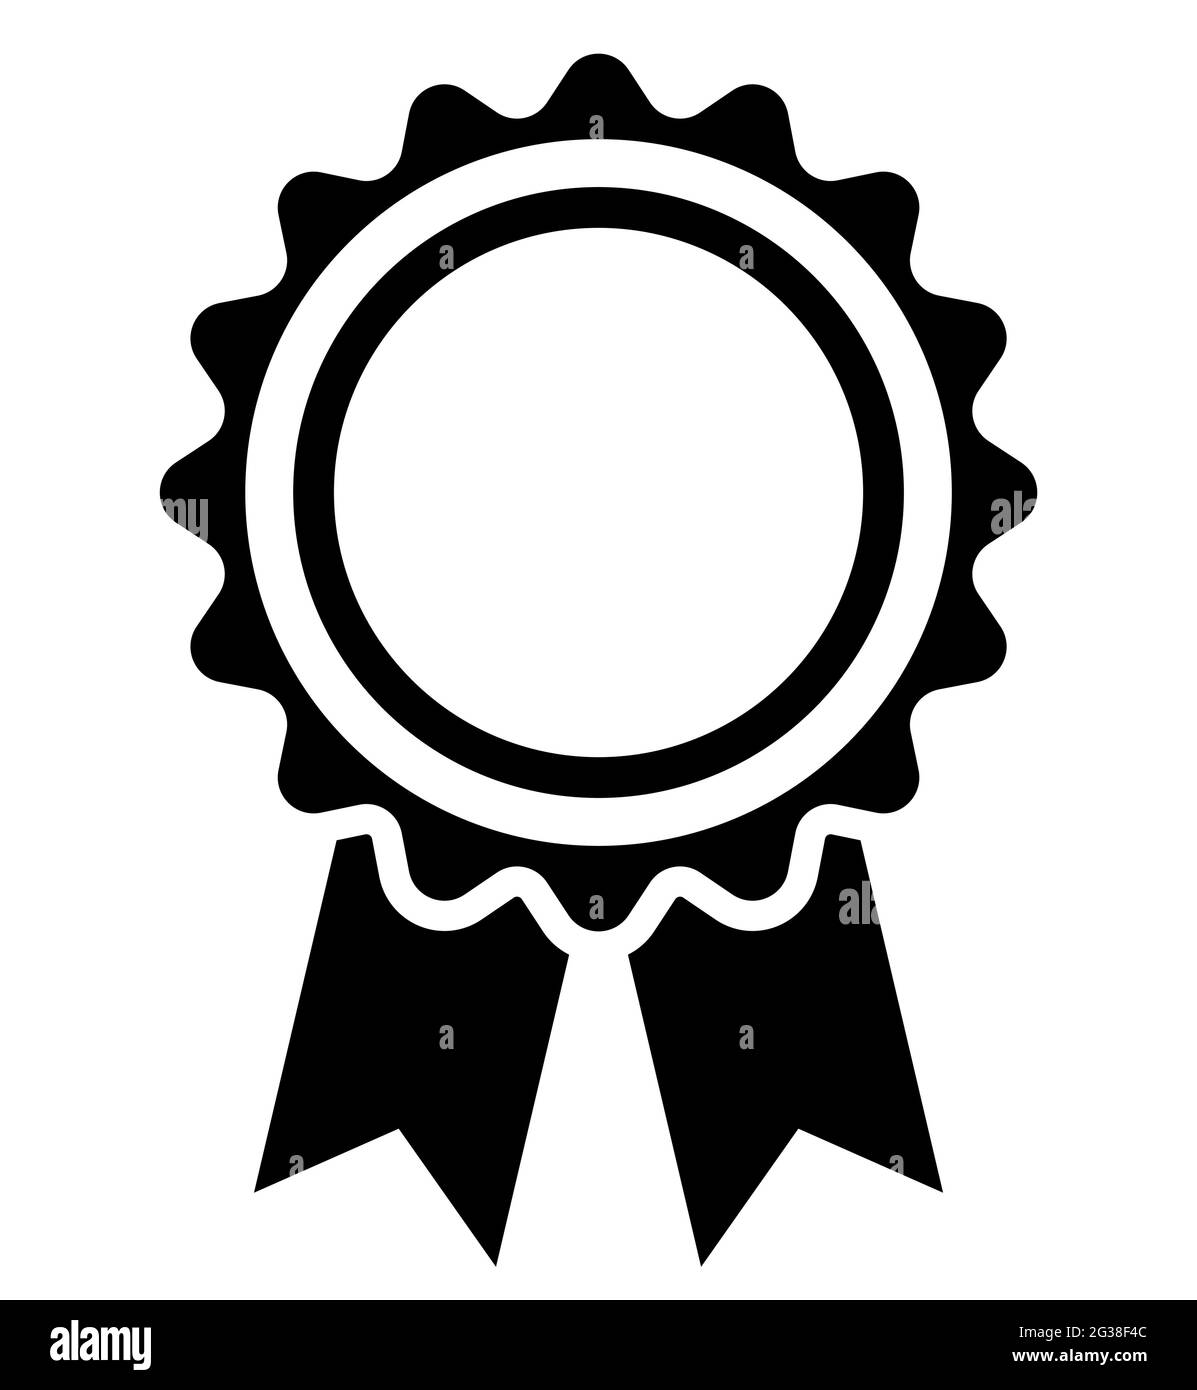 Award sticker or prize symbol vector illustration icon Stock Vector ...